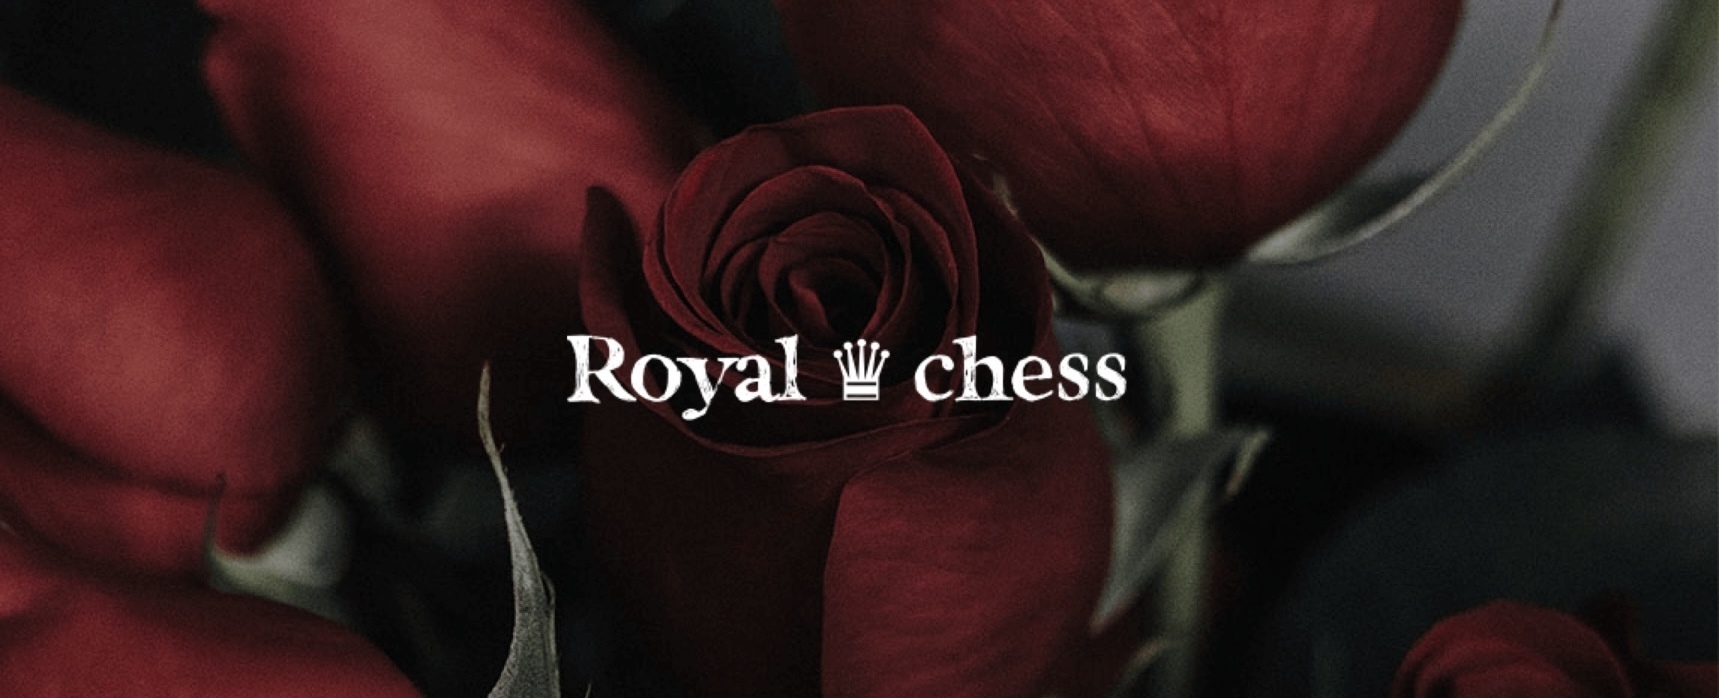 Royal ♛ chess